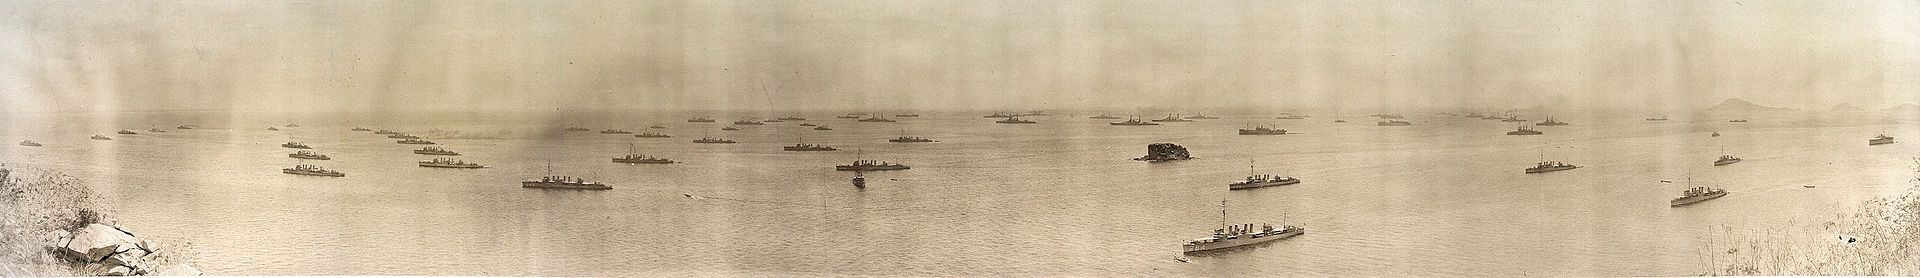 The U.S. fleet off the coast of Panama in 1906. Wikipedia.